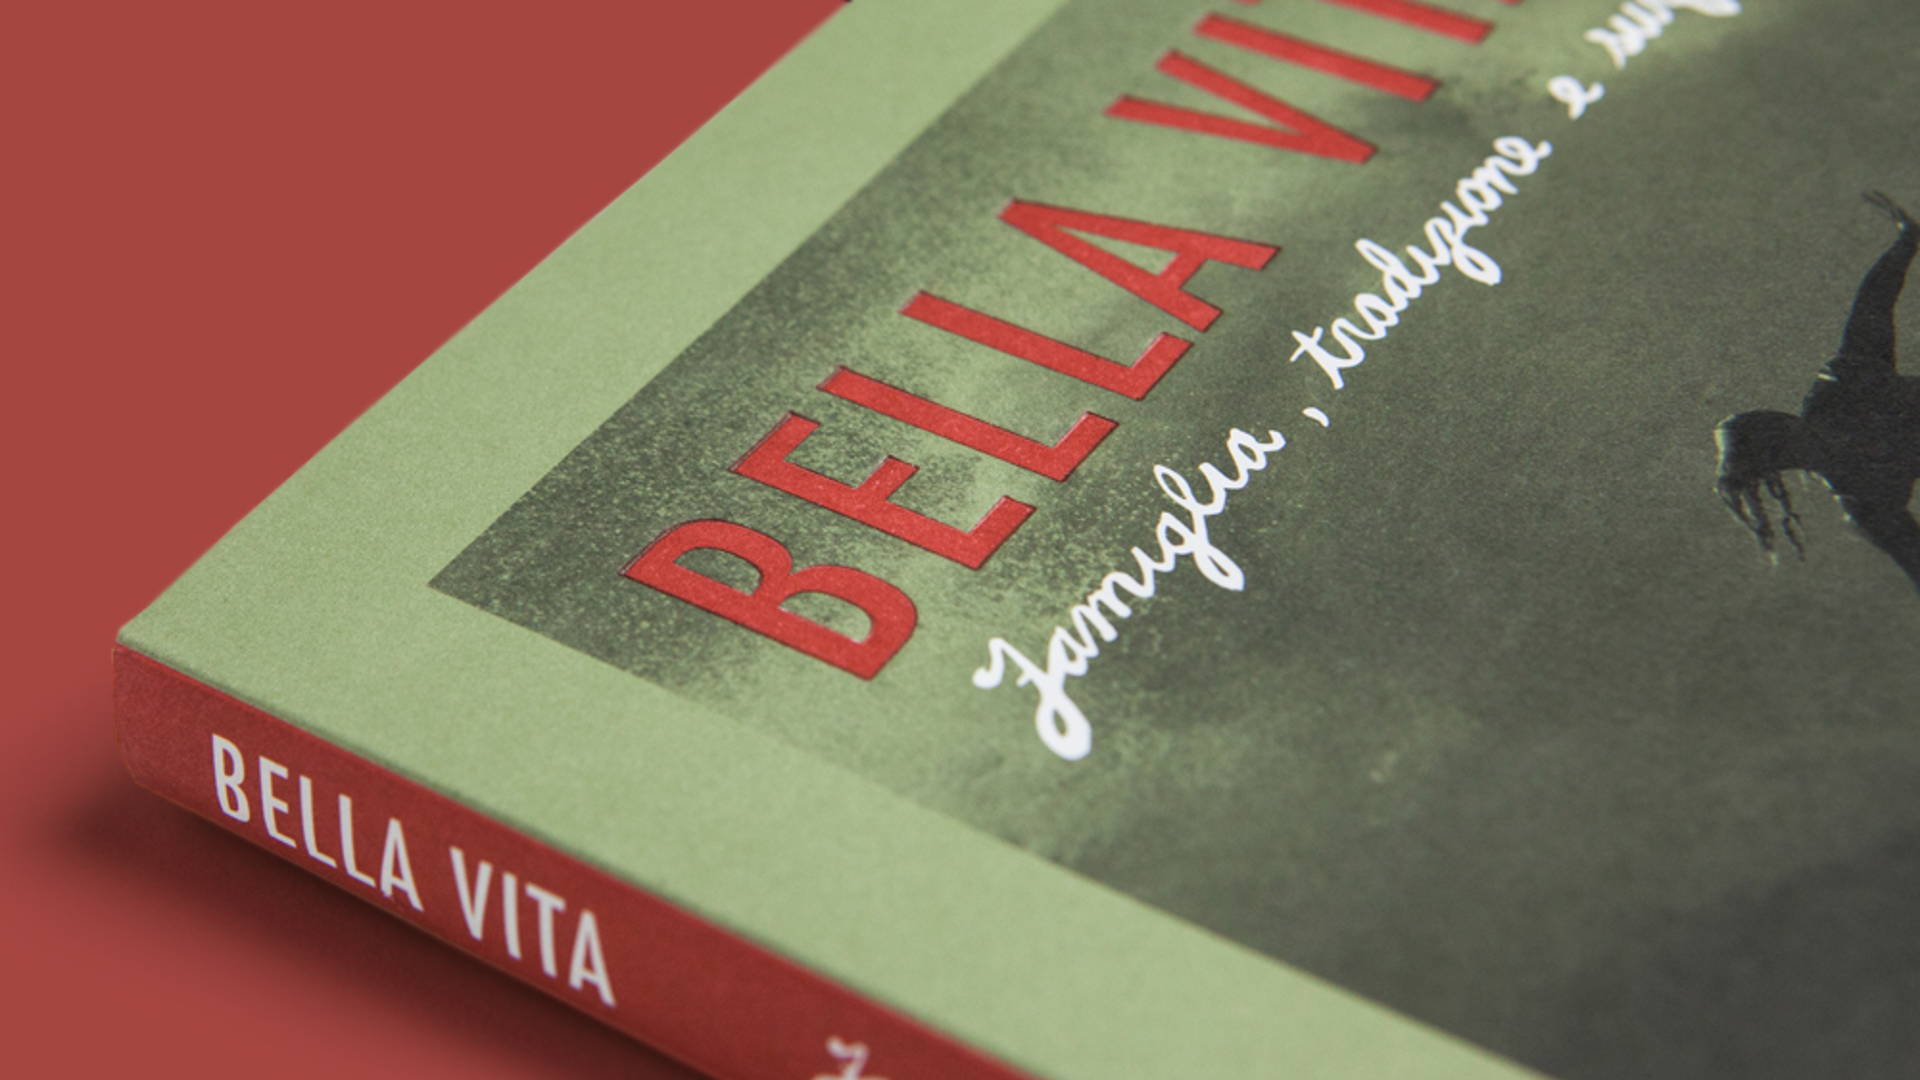 Bella Vita DVD Package | Dieline - Design, Branding & Packaging Inspiration